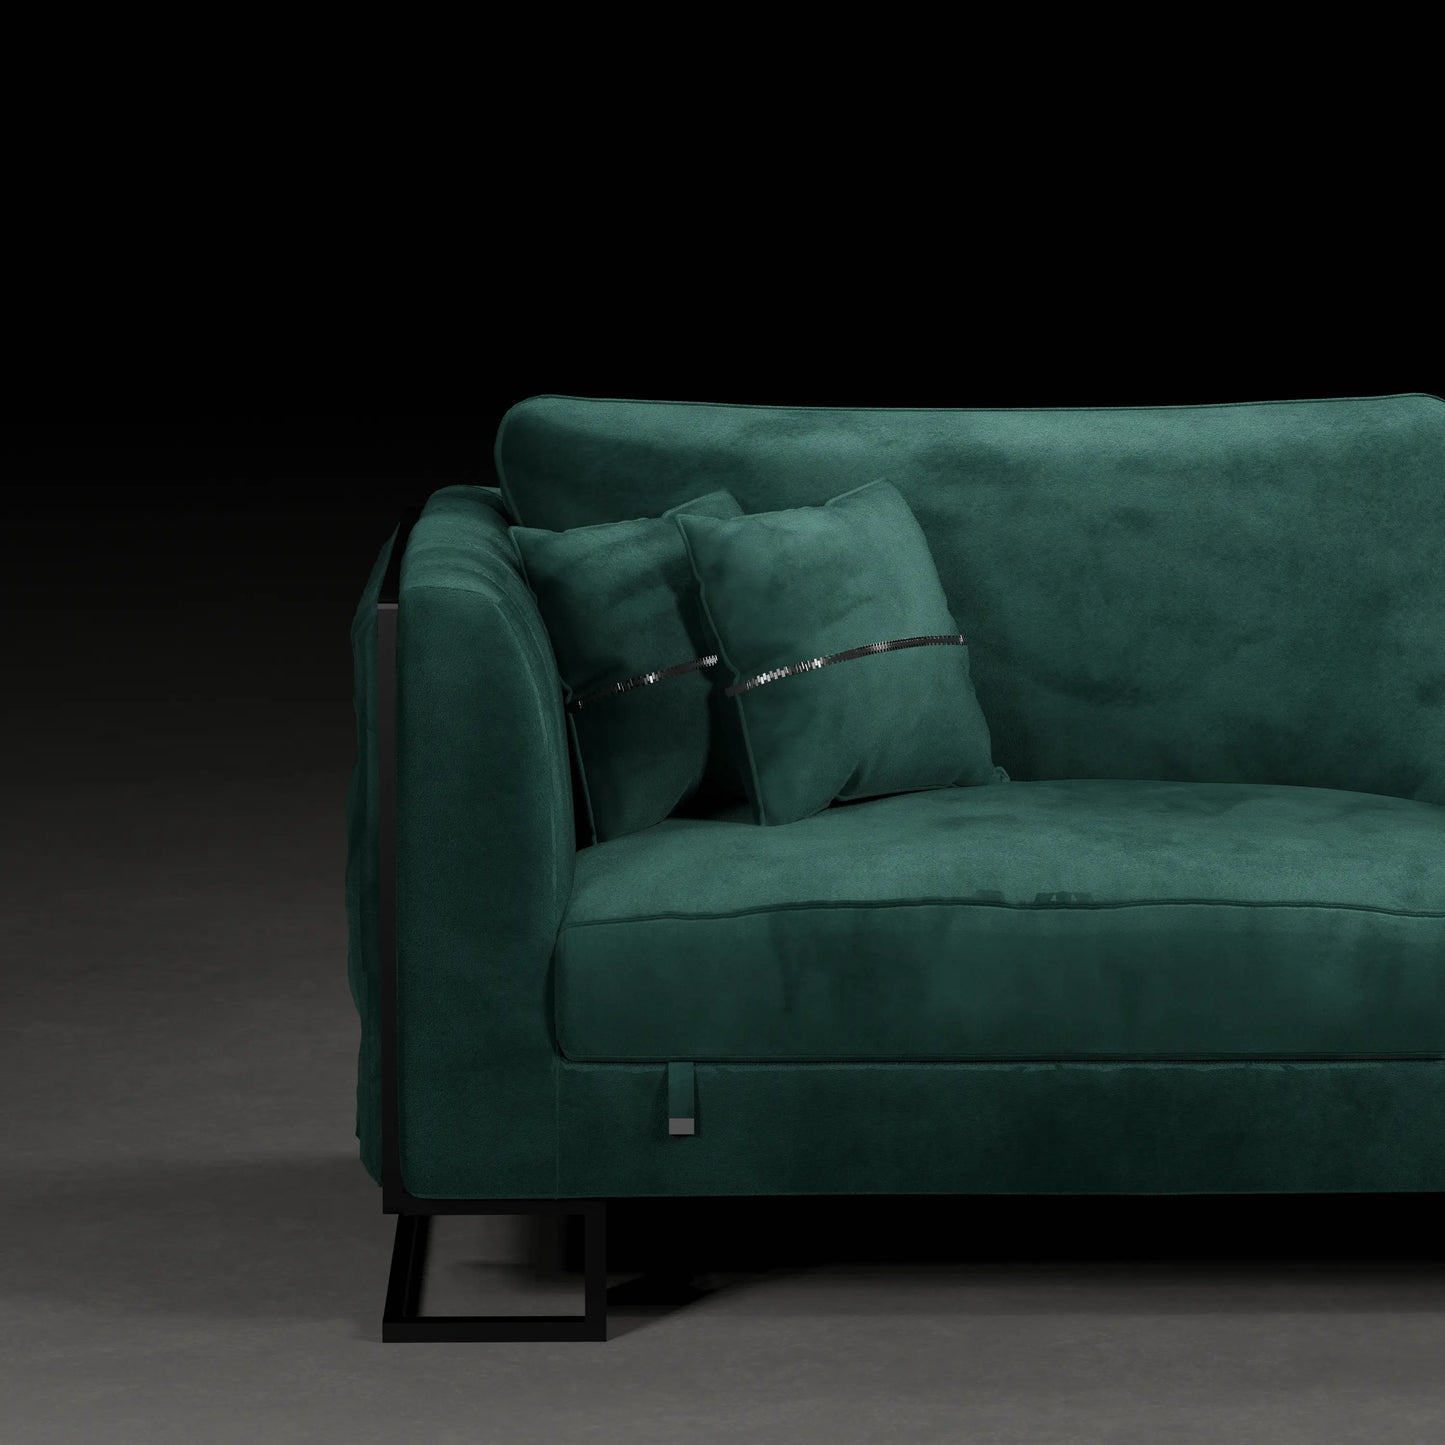 CAROLINA - 4 Seater Couch in Velvet Finish | Green Colour